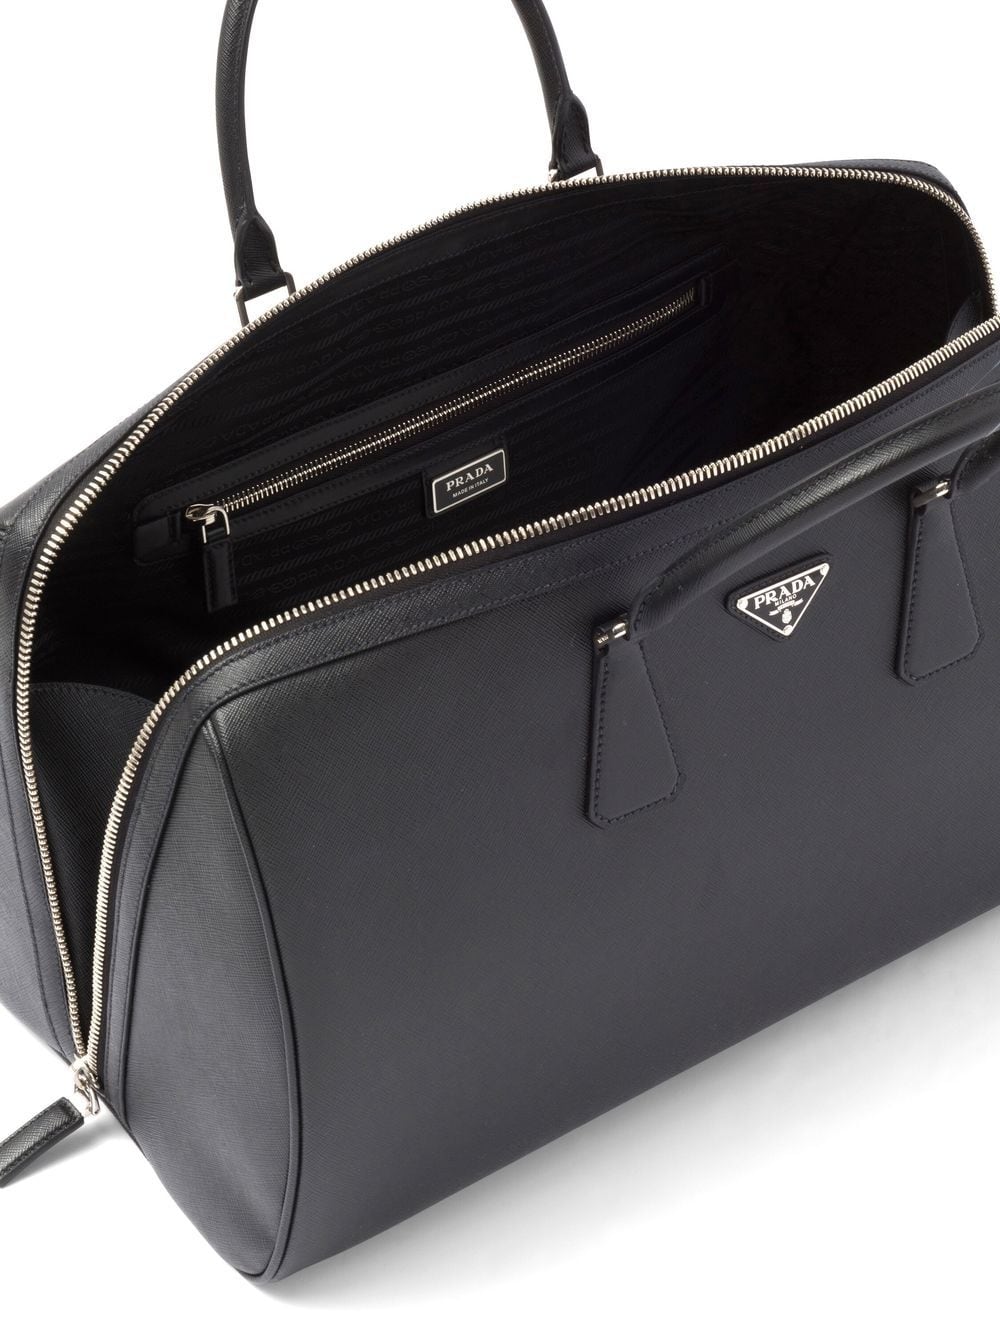 Prada Saffiano Leather Duffle Bag - Black - Holdalls